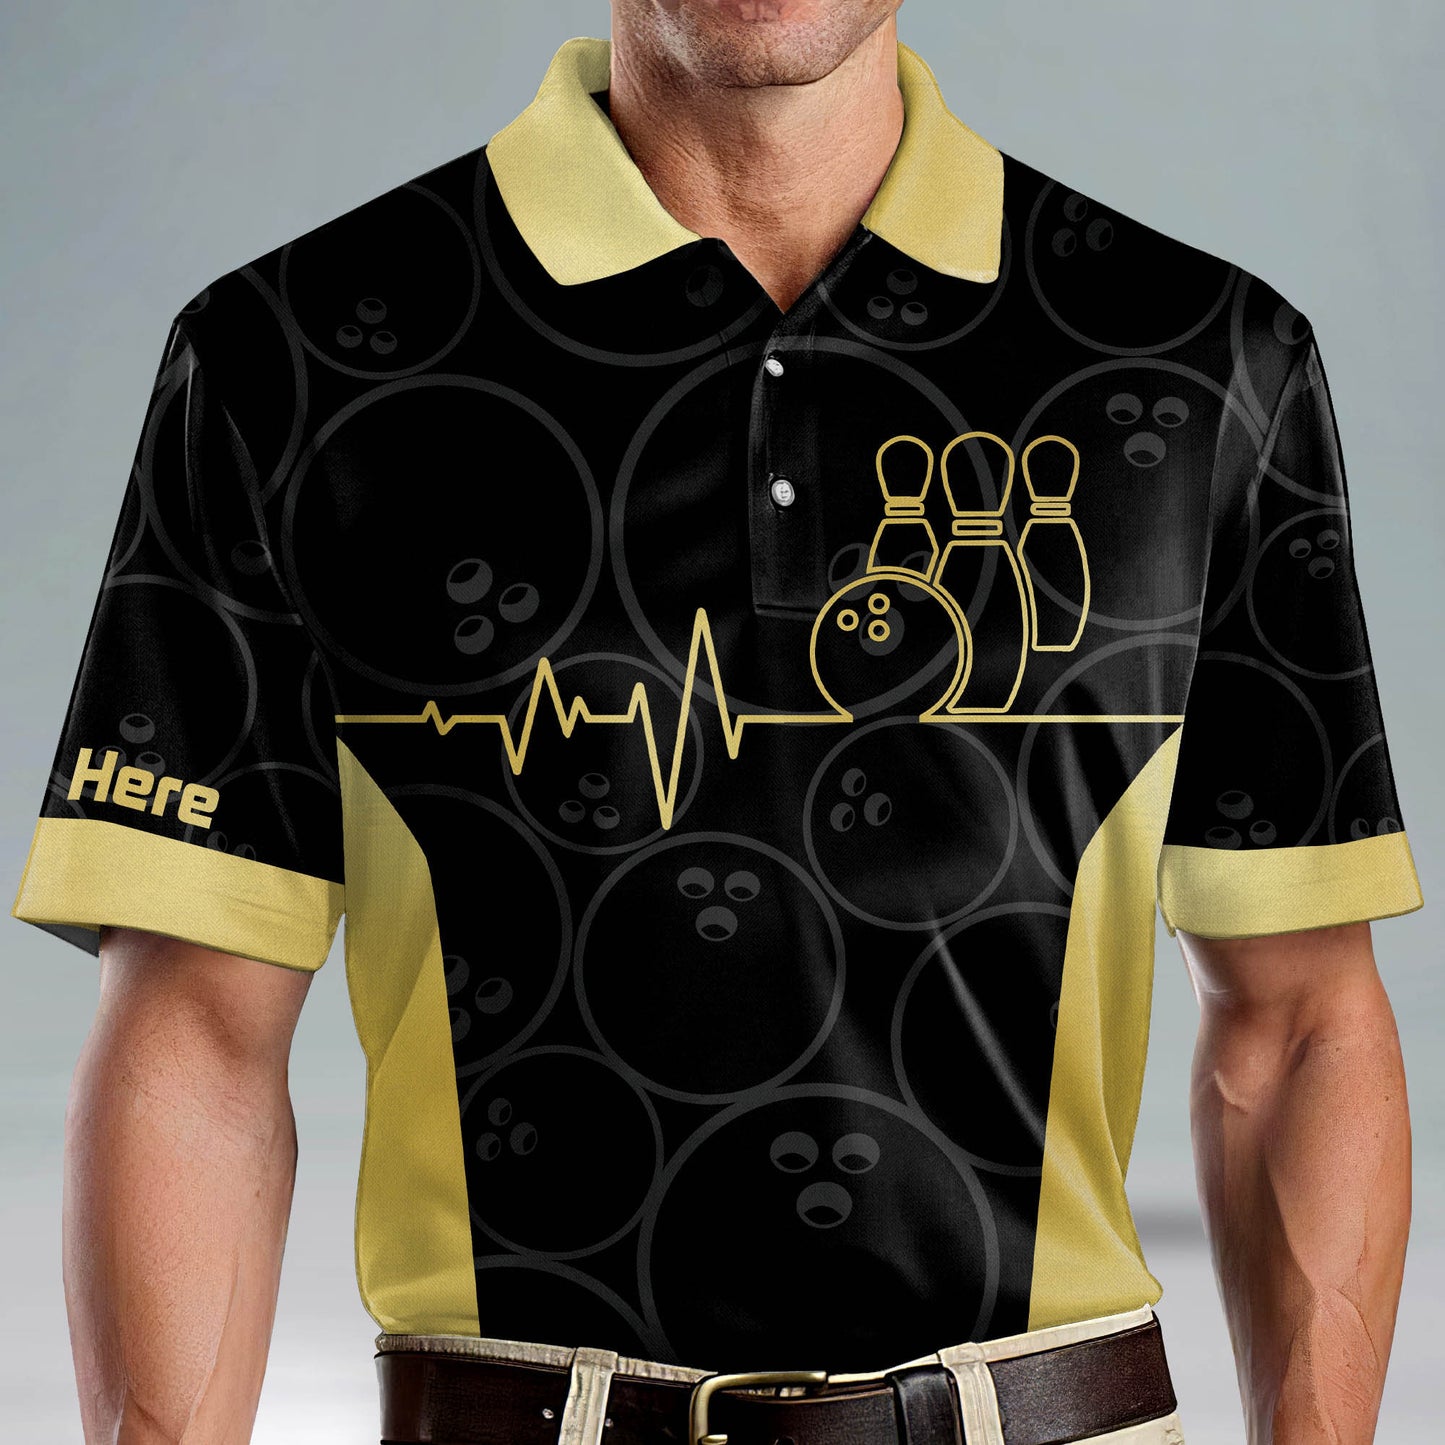 Custom Bowling Shirts For Men - Bowling Shirt Retro For Men - Custom Funny Bowling Shirts For Men - Crazy Yellow Bowling Team Shirts Short Sleeve Polo BM0018